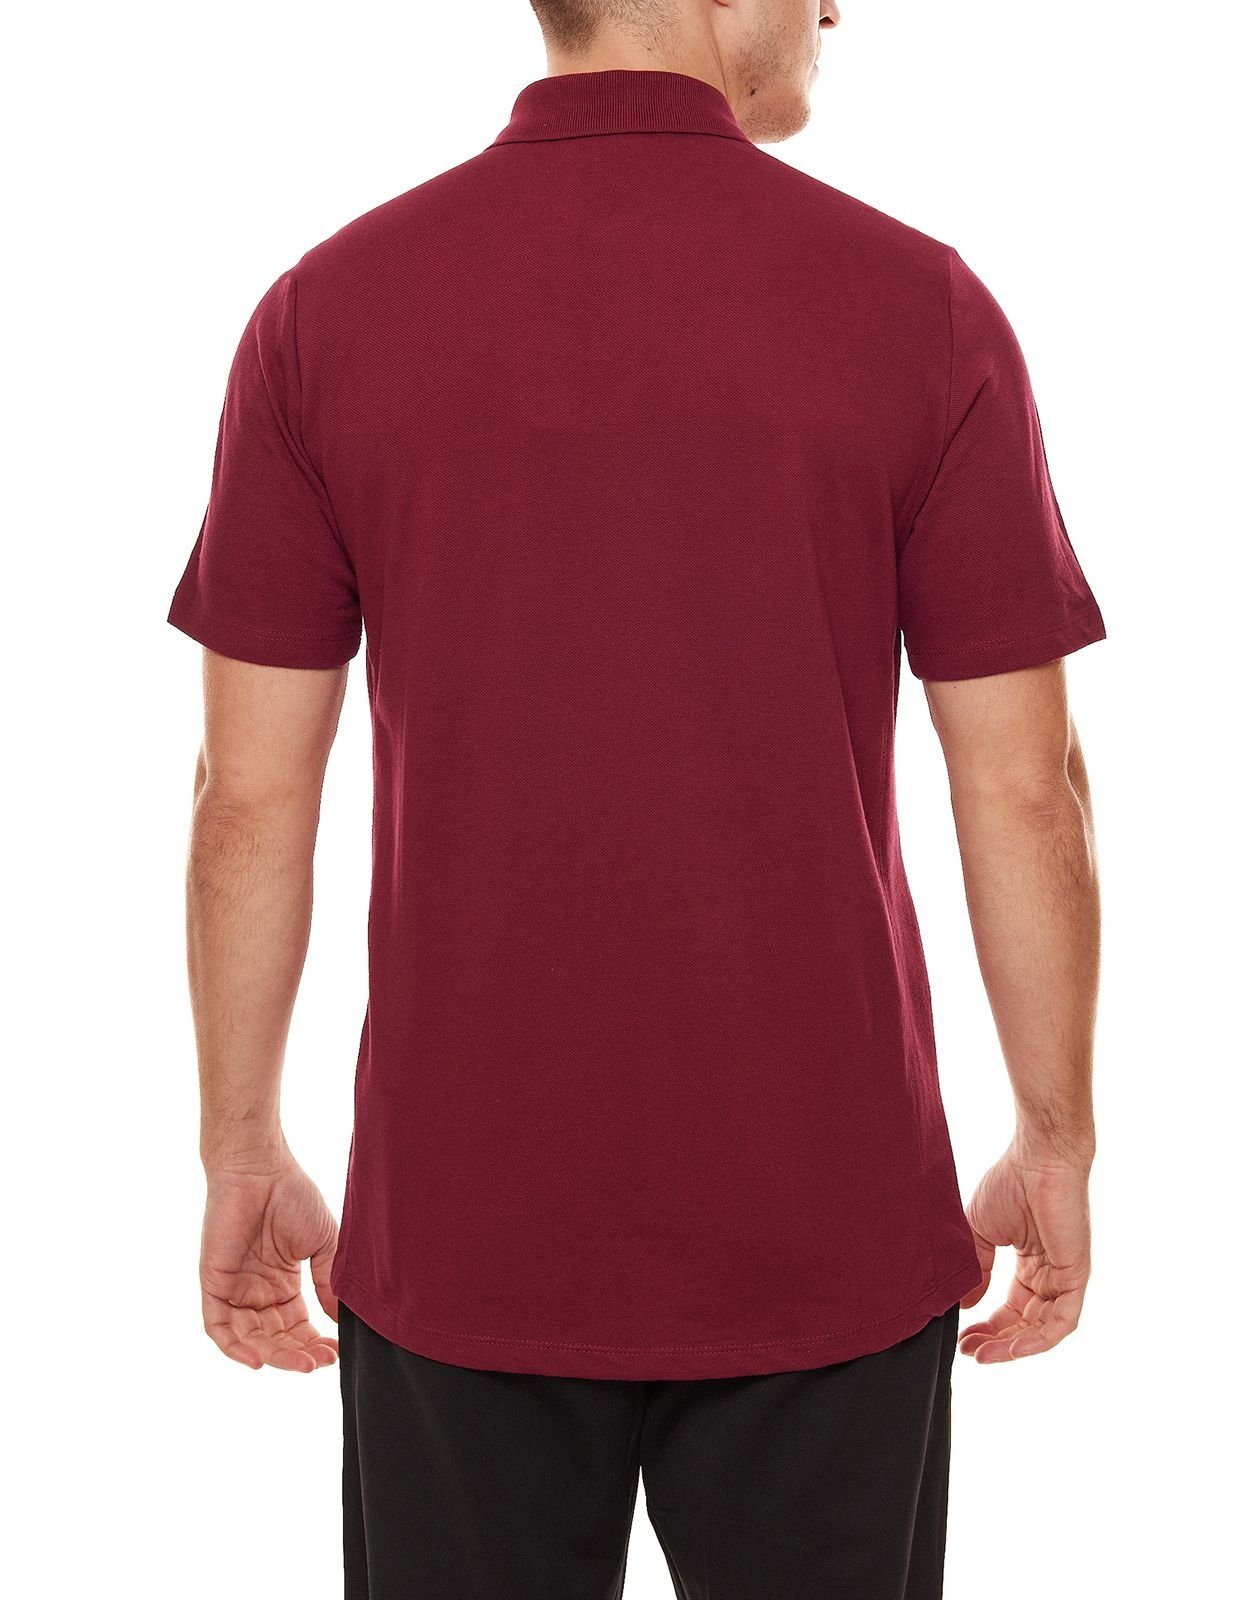 Club Herren Essential Rundhalsshirt zeitloses Polo-Shirt Bordeaux Umbro umbro UMTM0323-6JY Golf-Shirt Polohemd